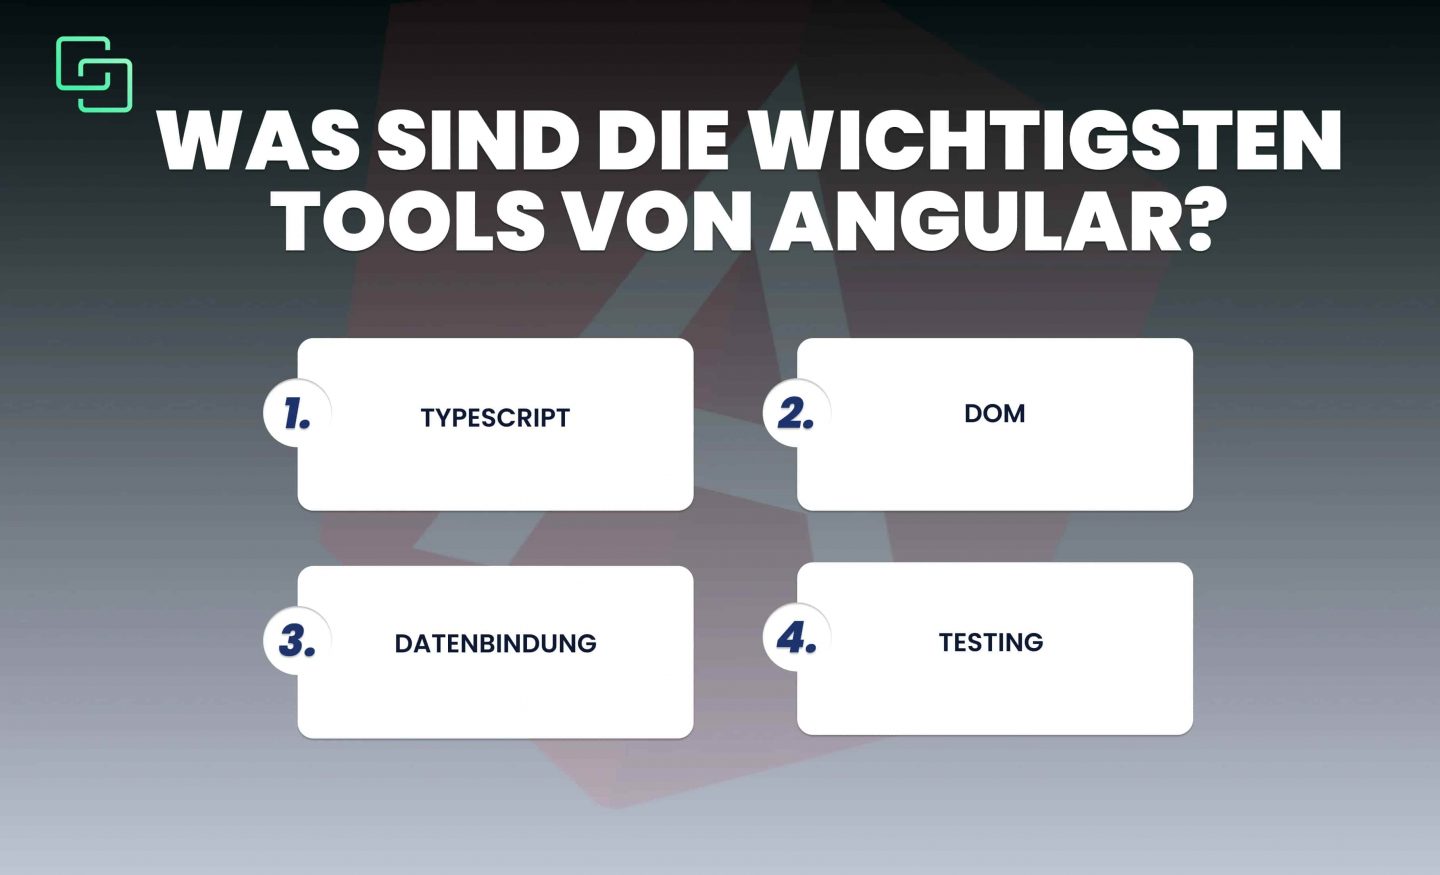 Tools von Angular